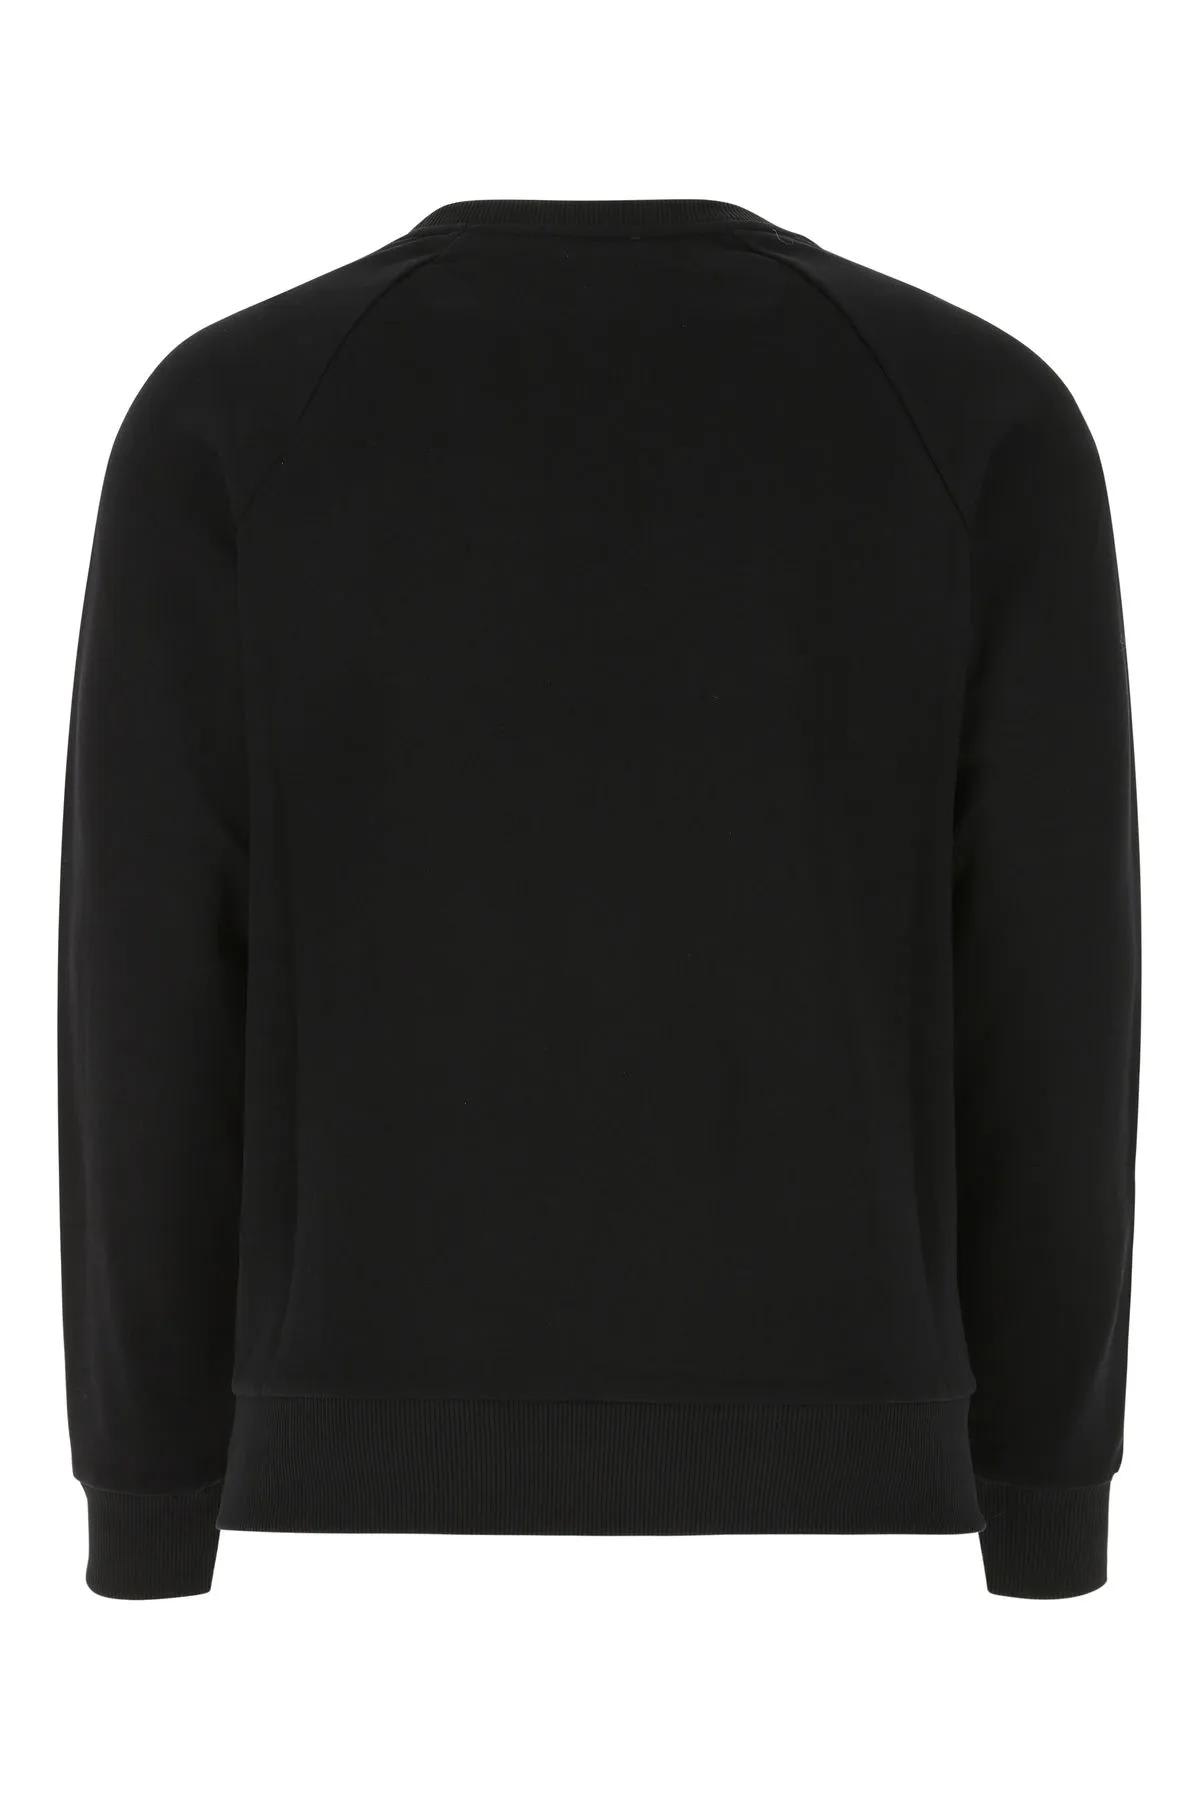 Balmain Black and Khaki Cotton Blend Sweatshirt - M